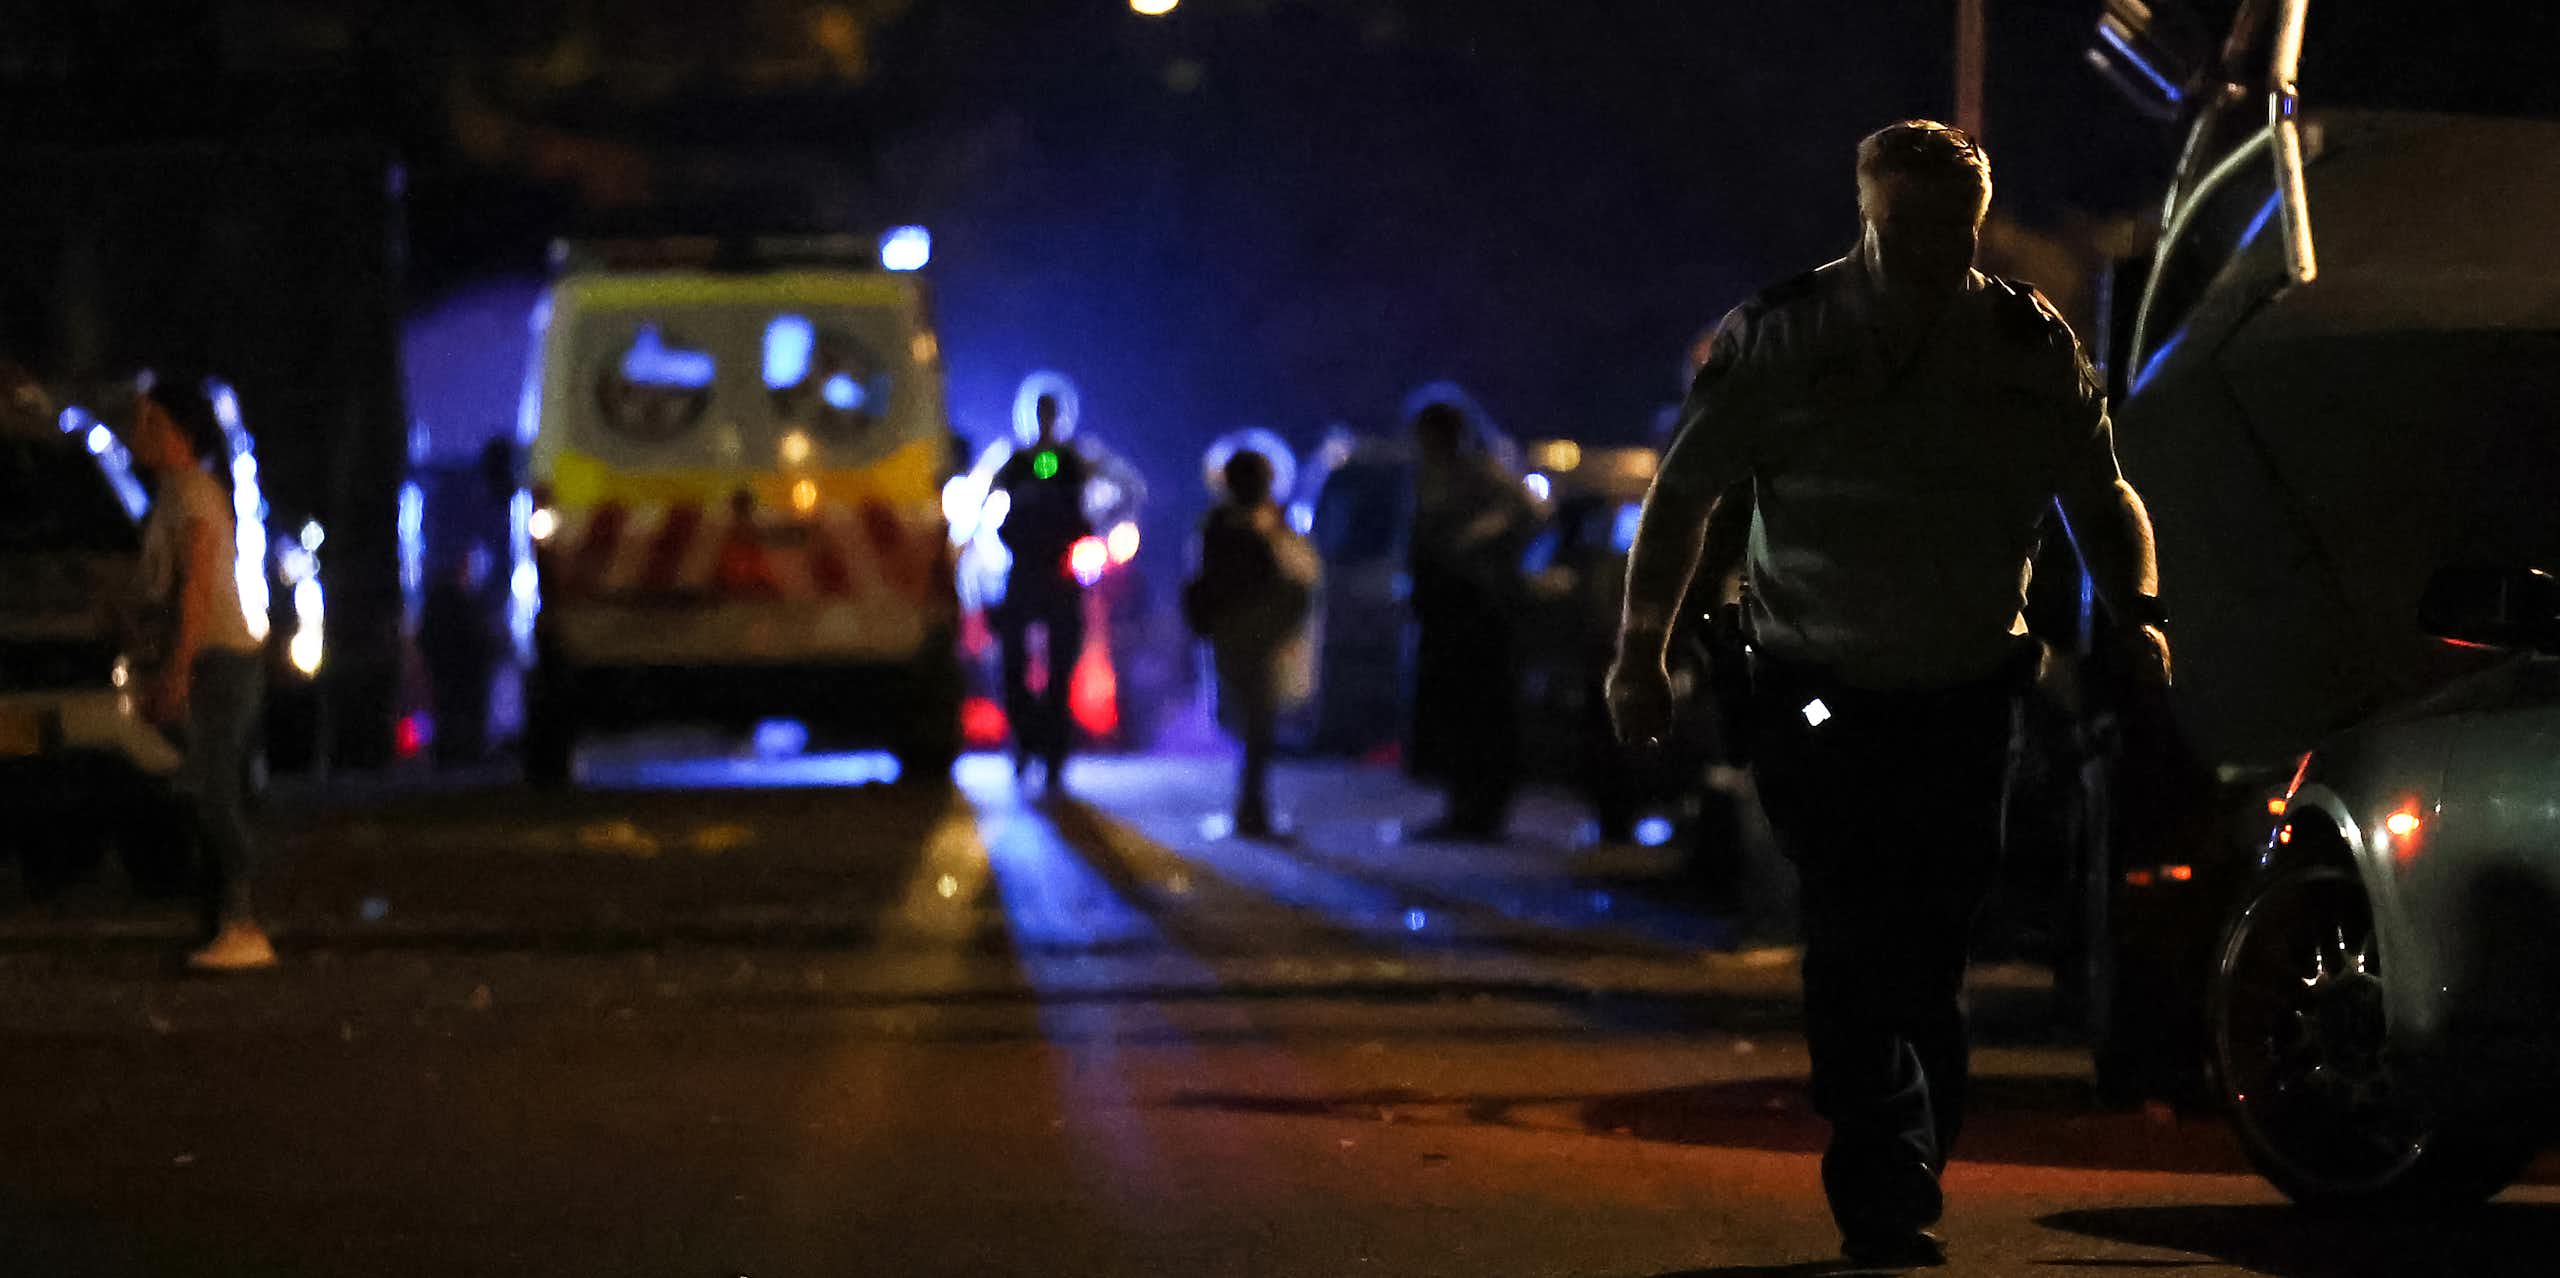 A police officer walks down a dark street, lit by emergency lights